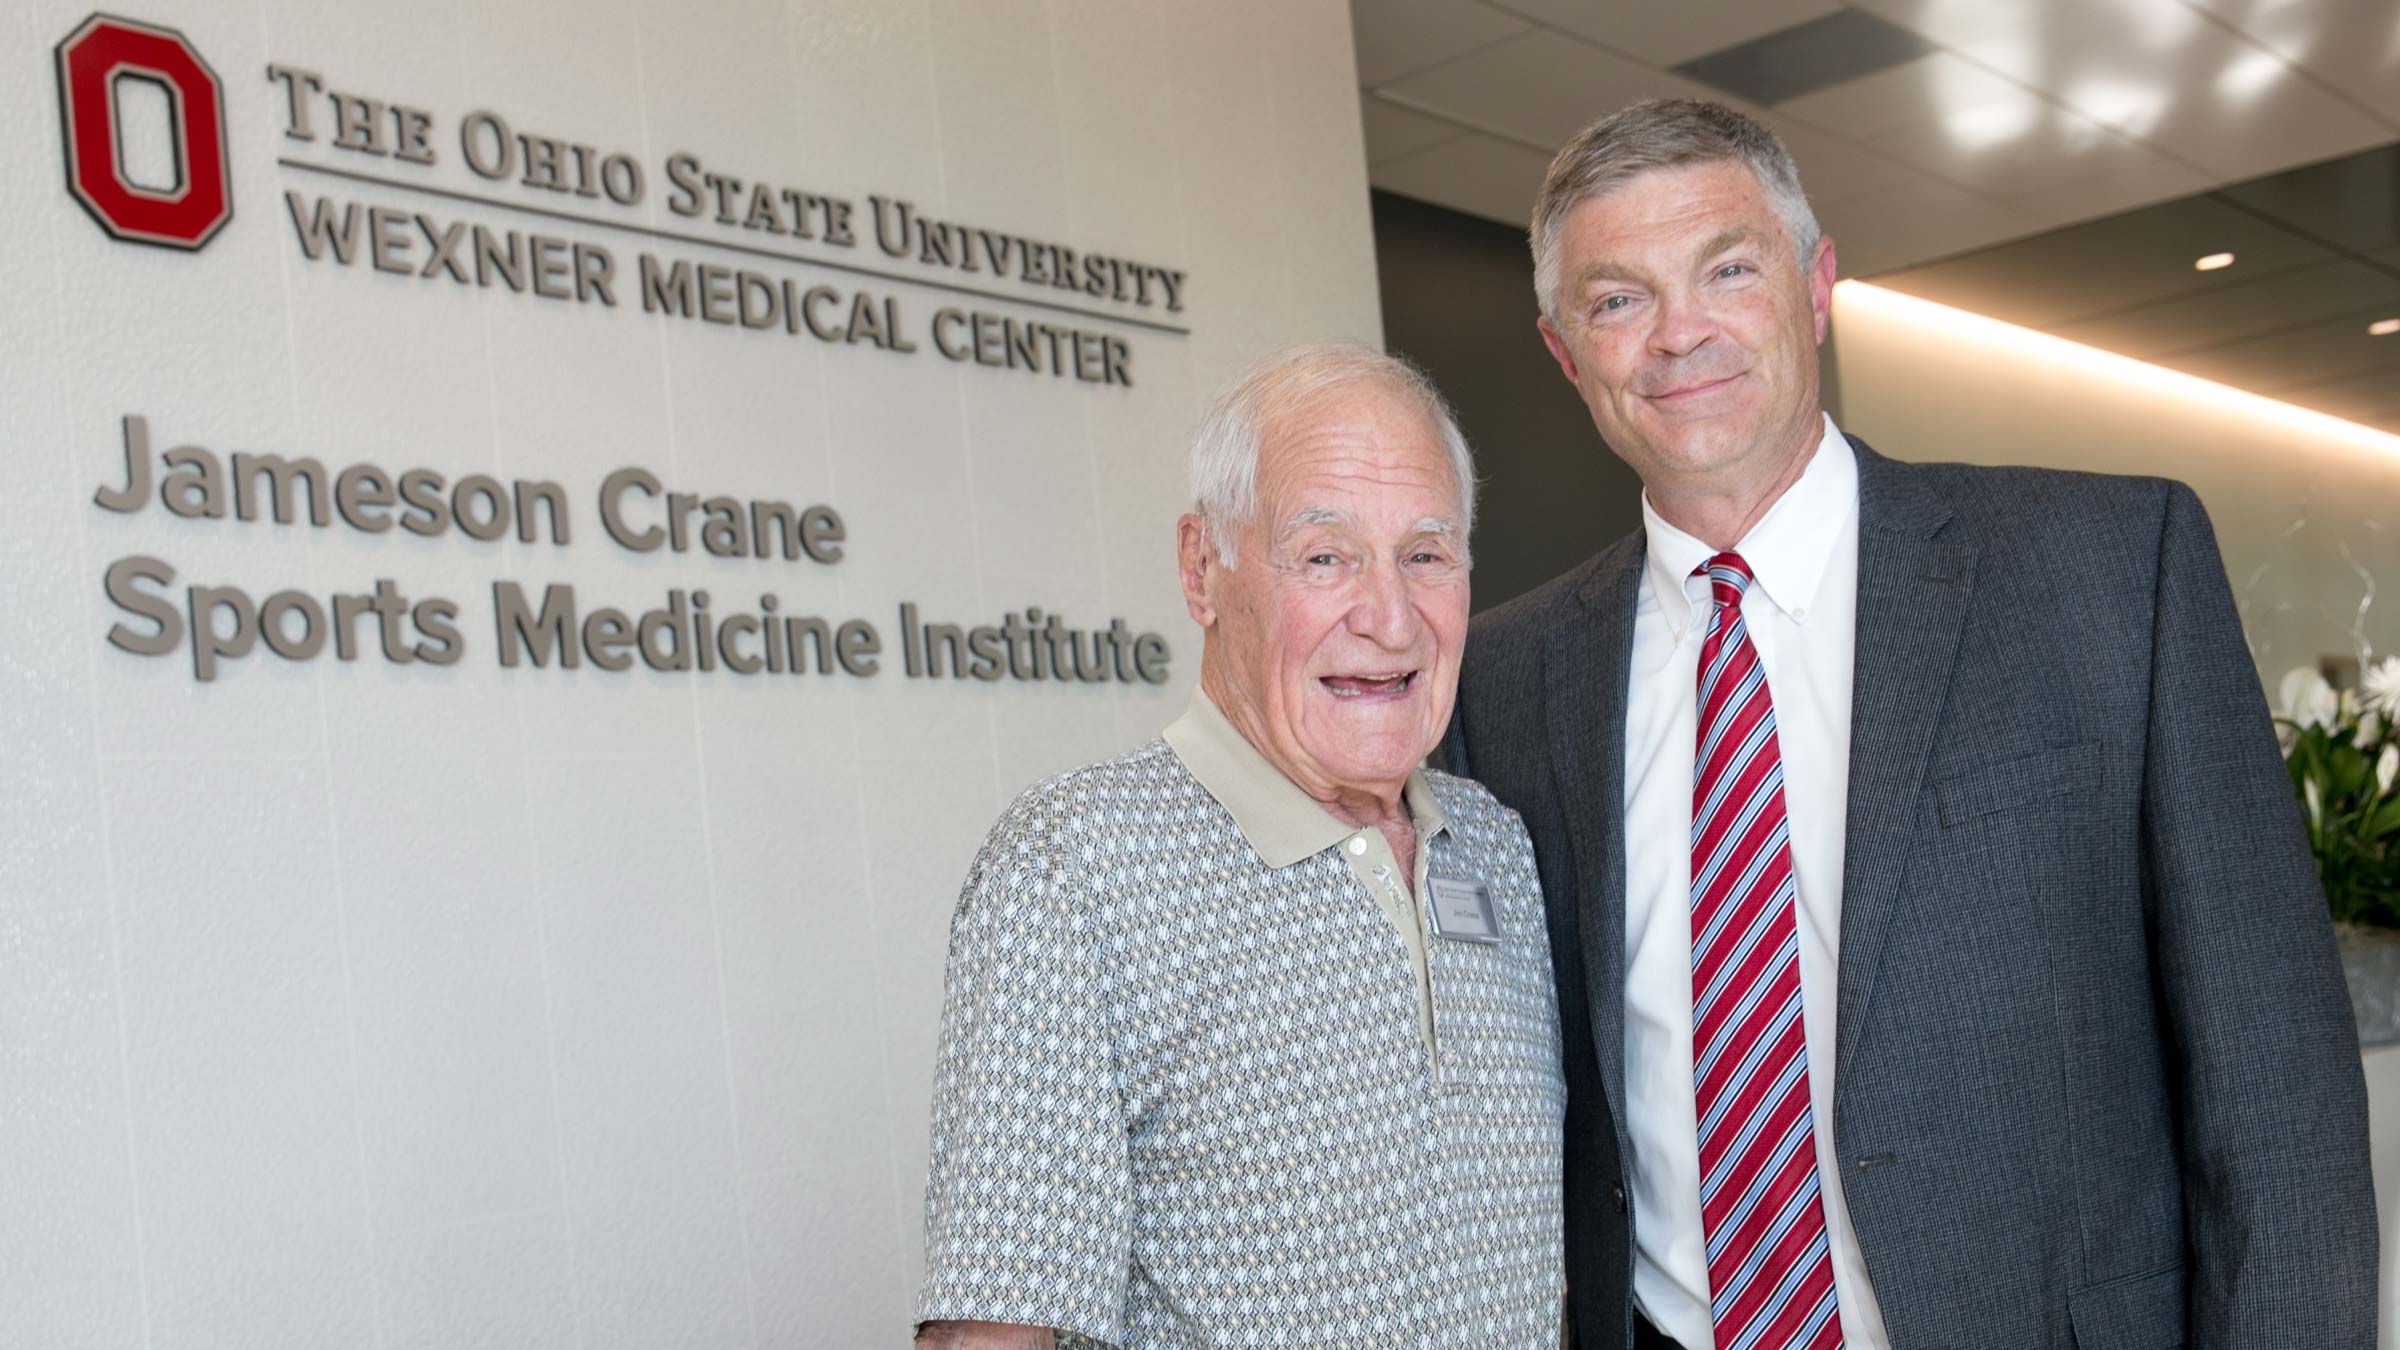 Dr. Kaeding and Jameson Crane in the Sports Medicine Institute